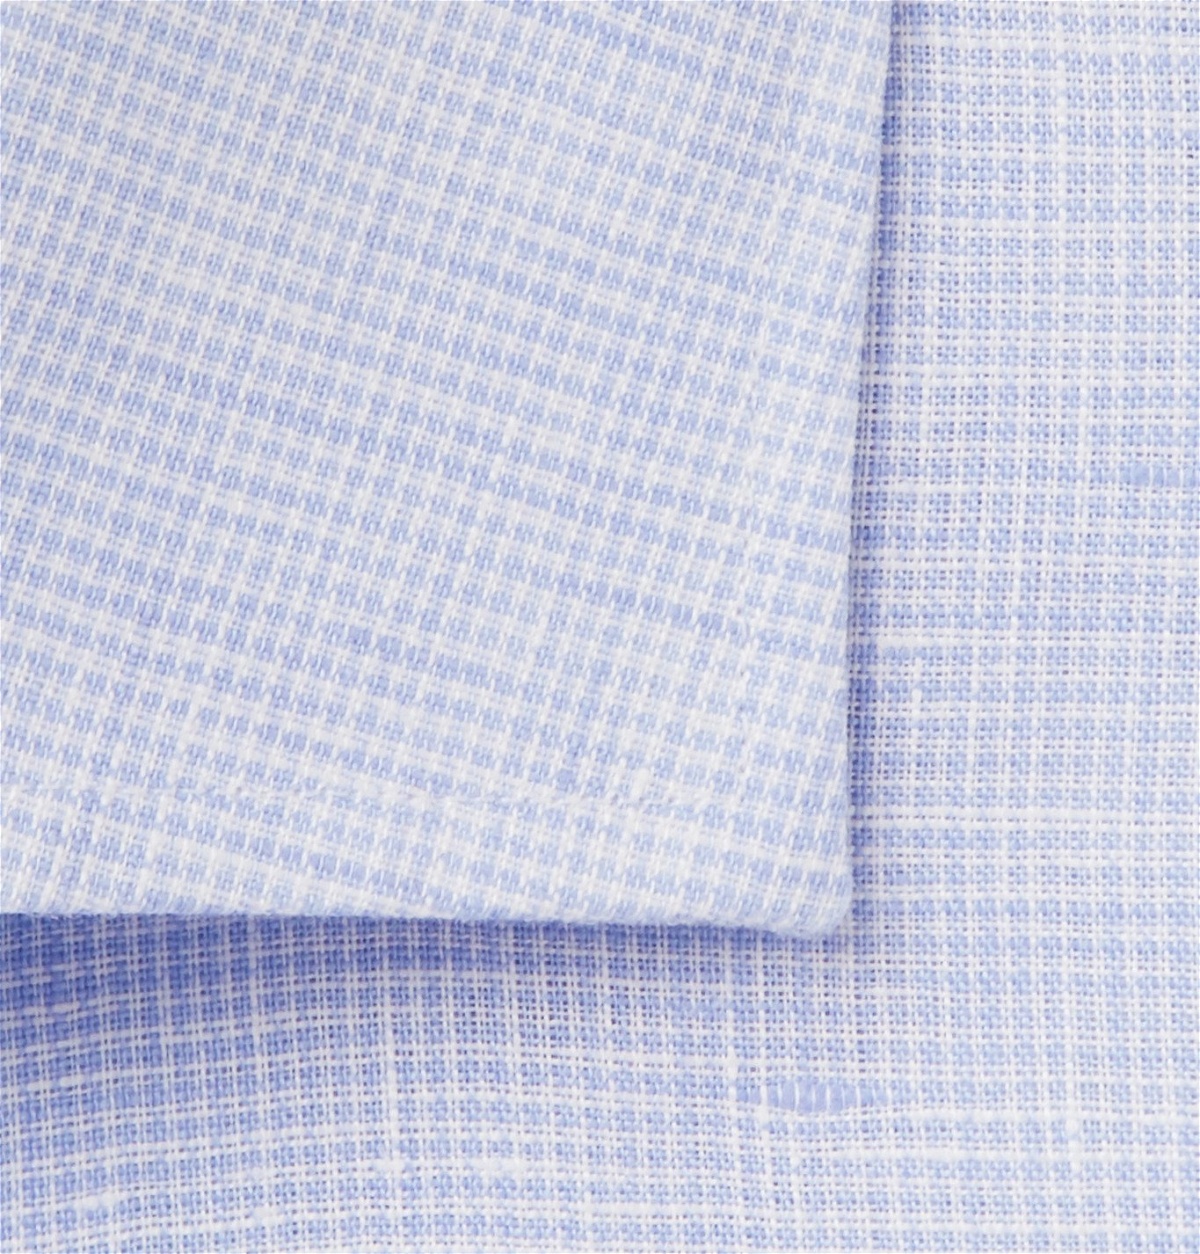 Canali - Striped Linen Shirt - Blue Canali